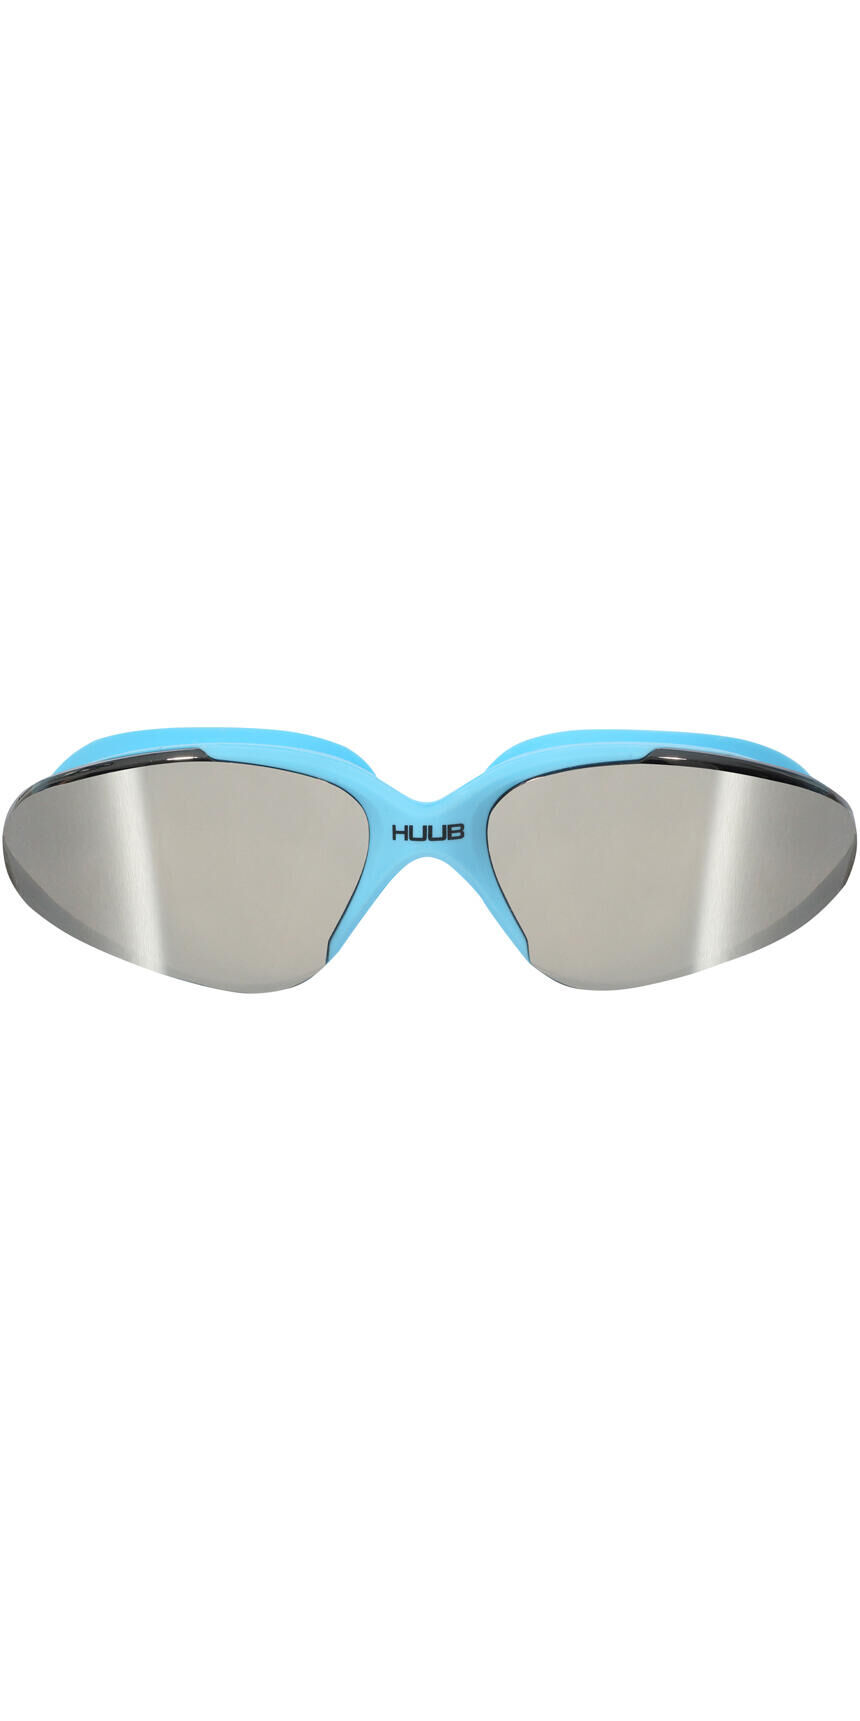 HUUB HUUB Vision Goggles - Blue